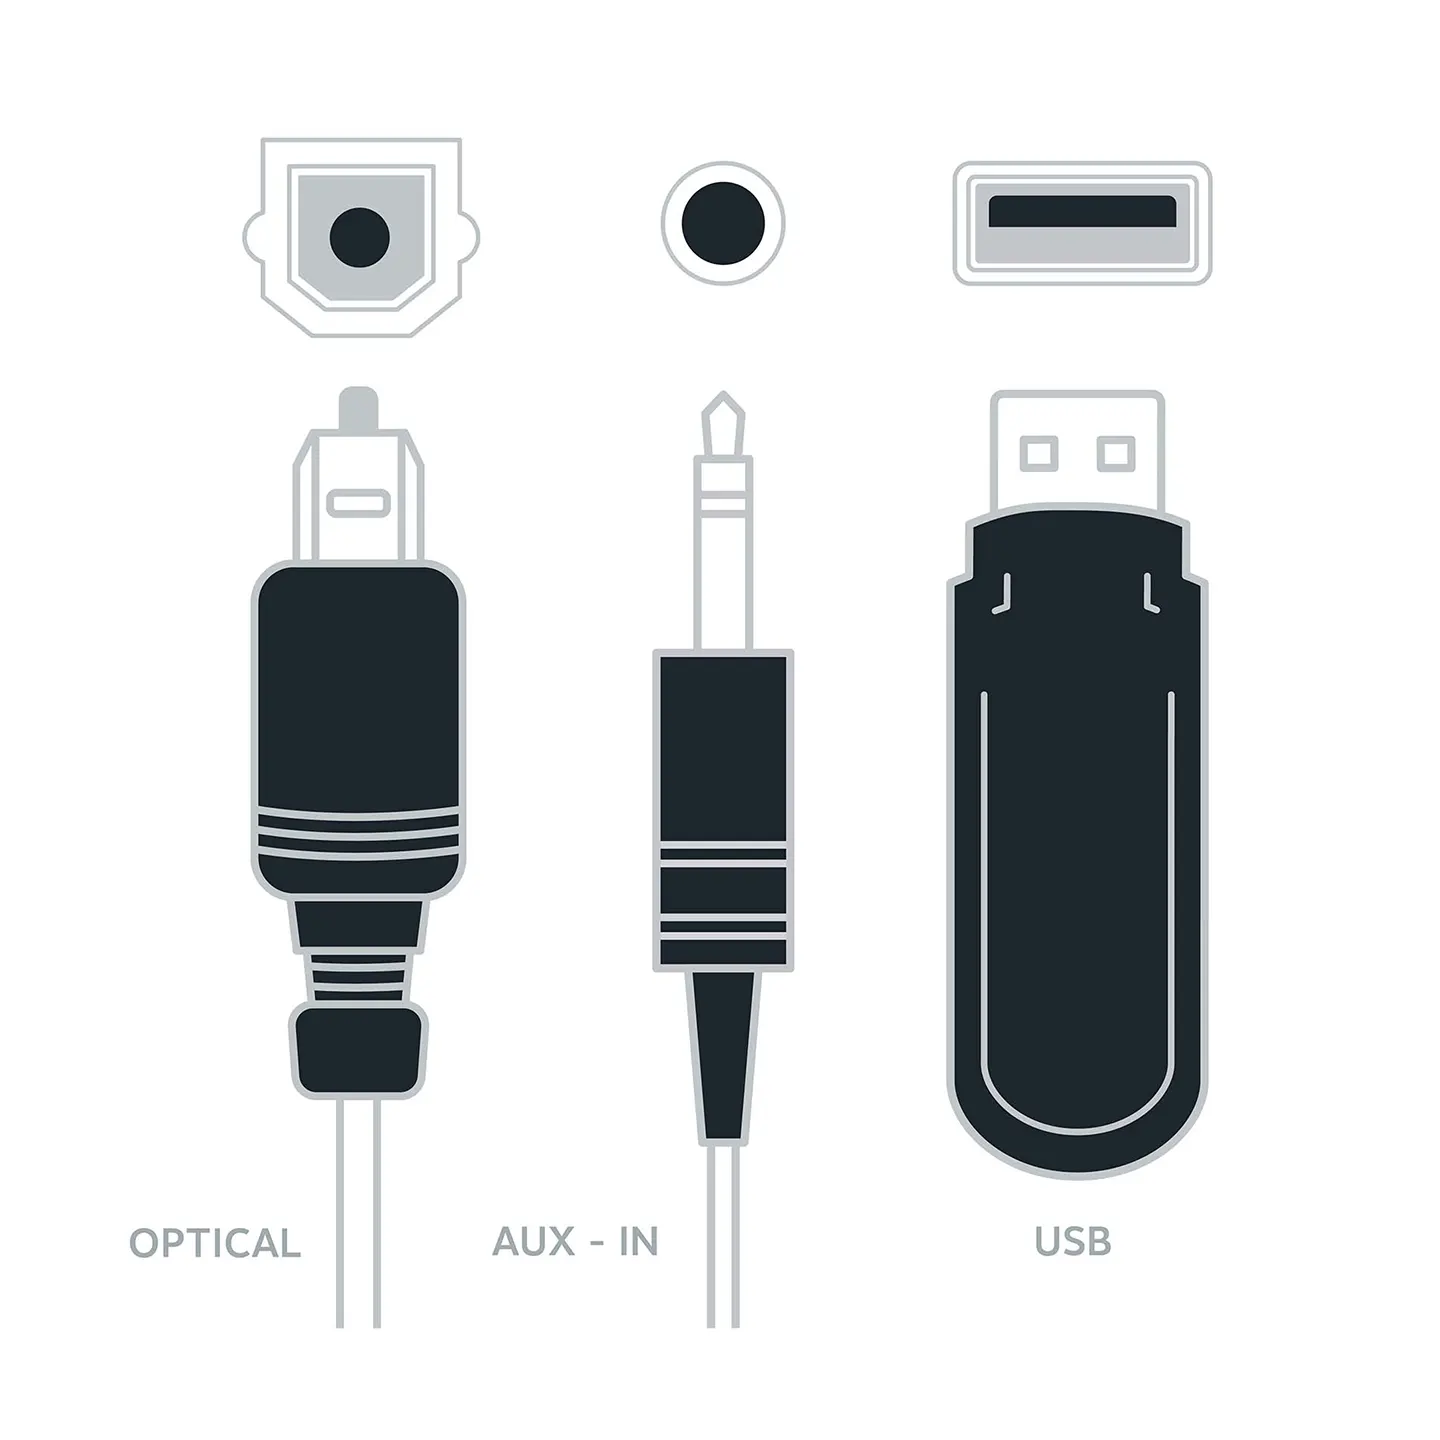 Optical, aux-in, USB inputs